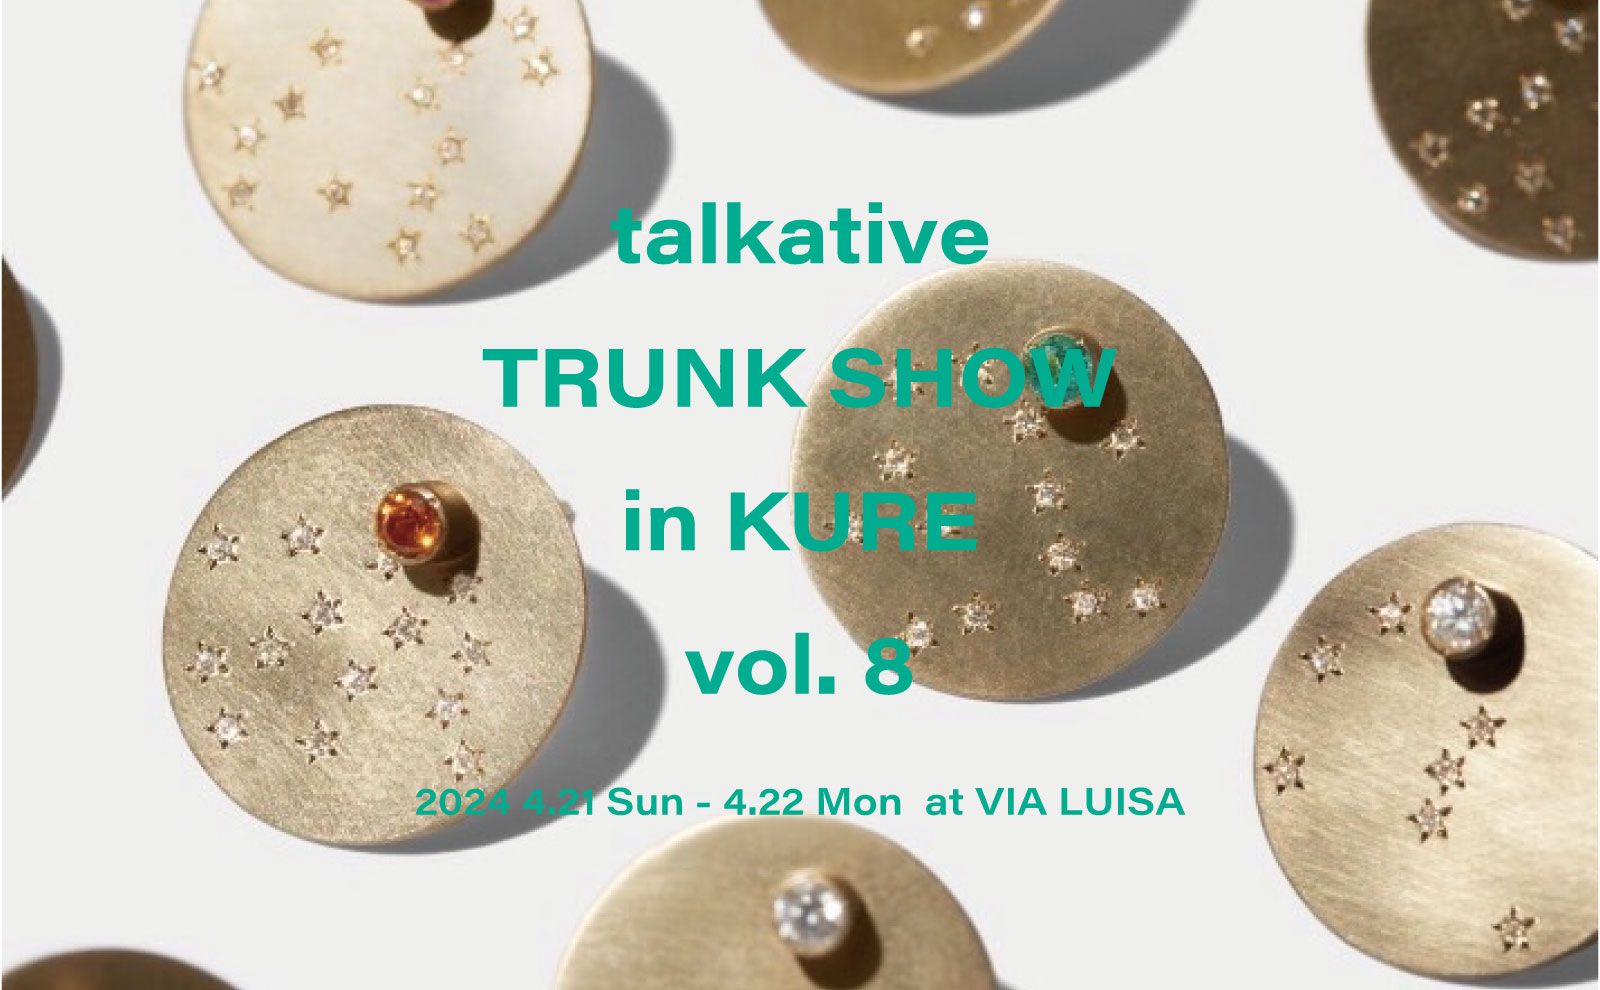 talkative TRUNK SHOW in KURE vol. 8